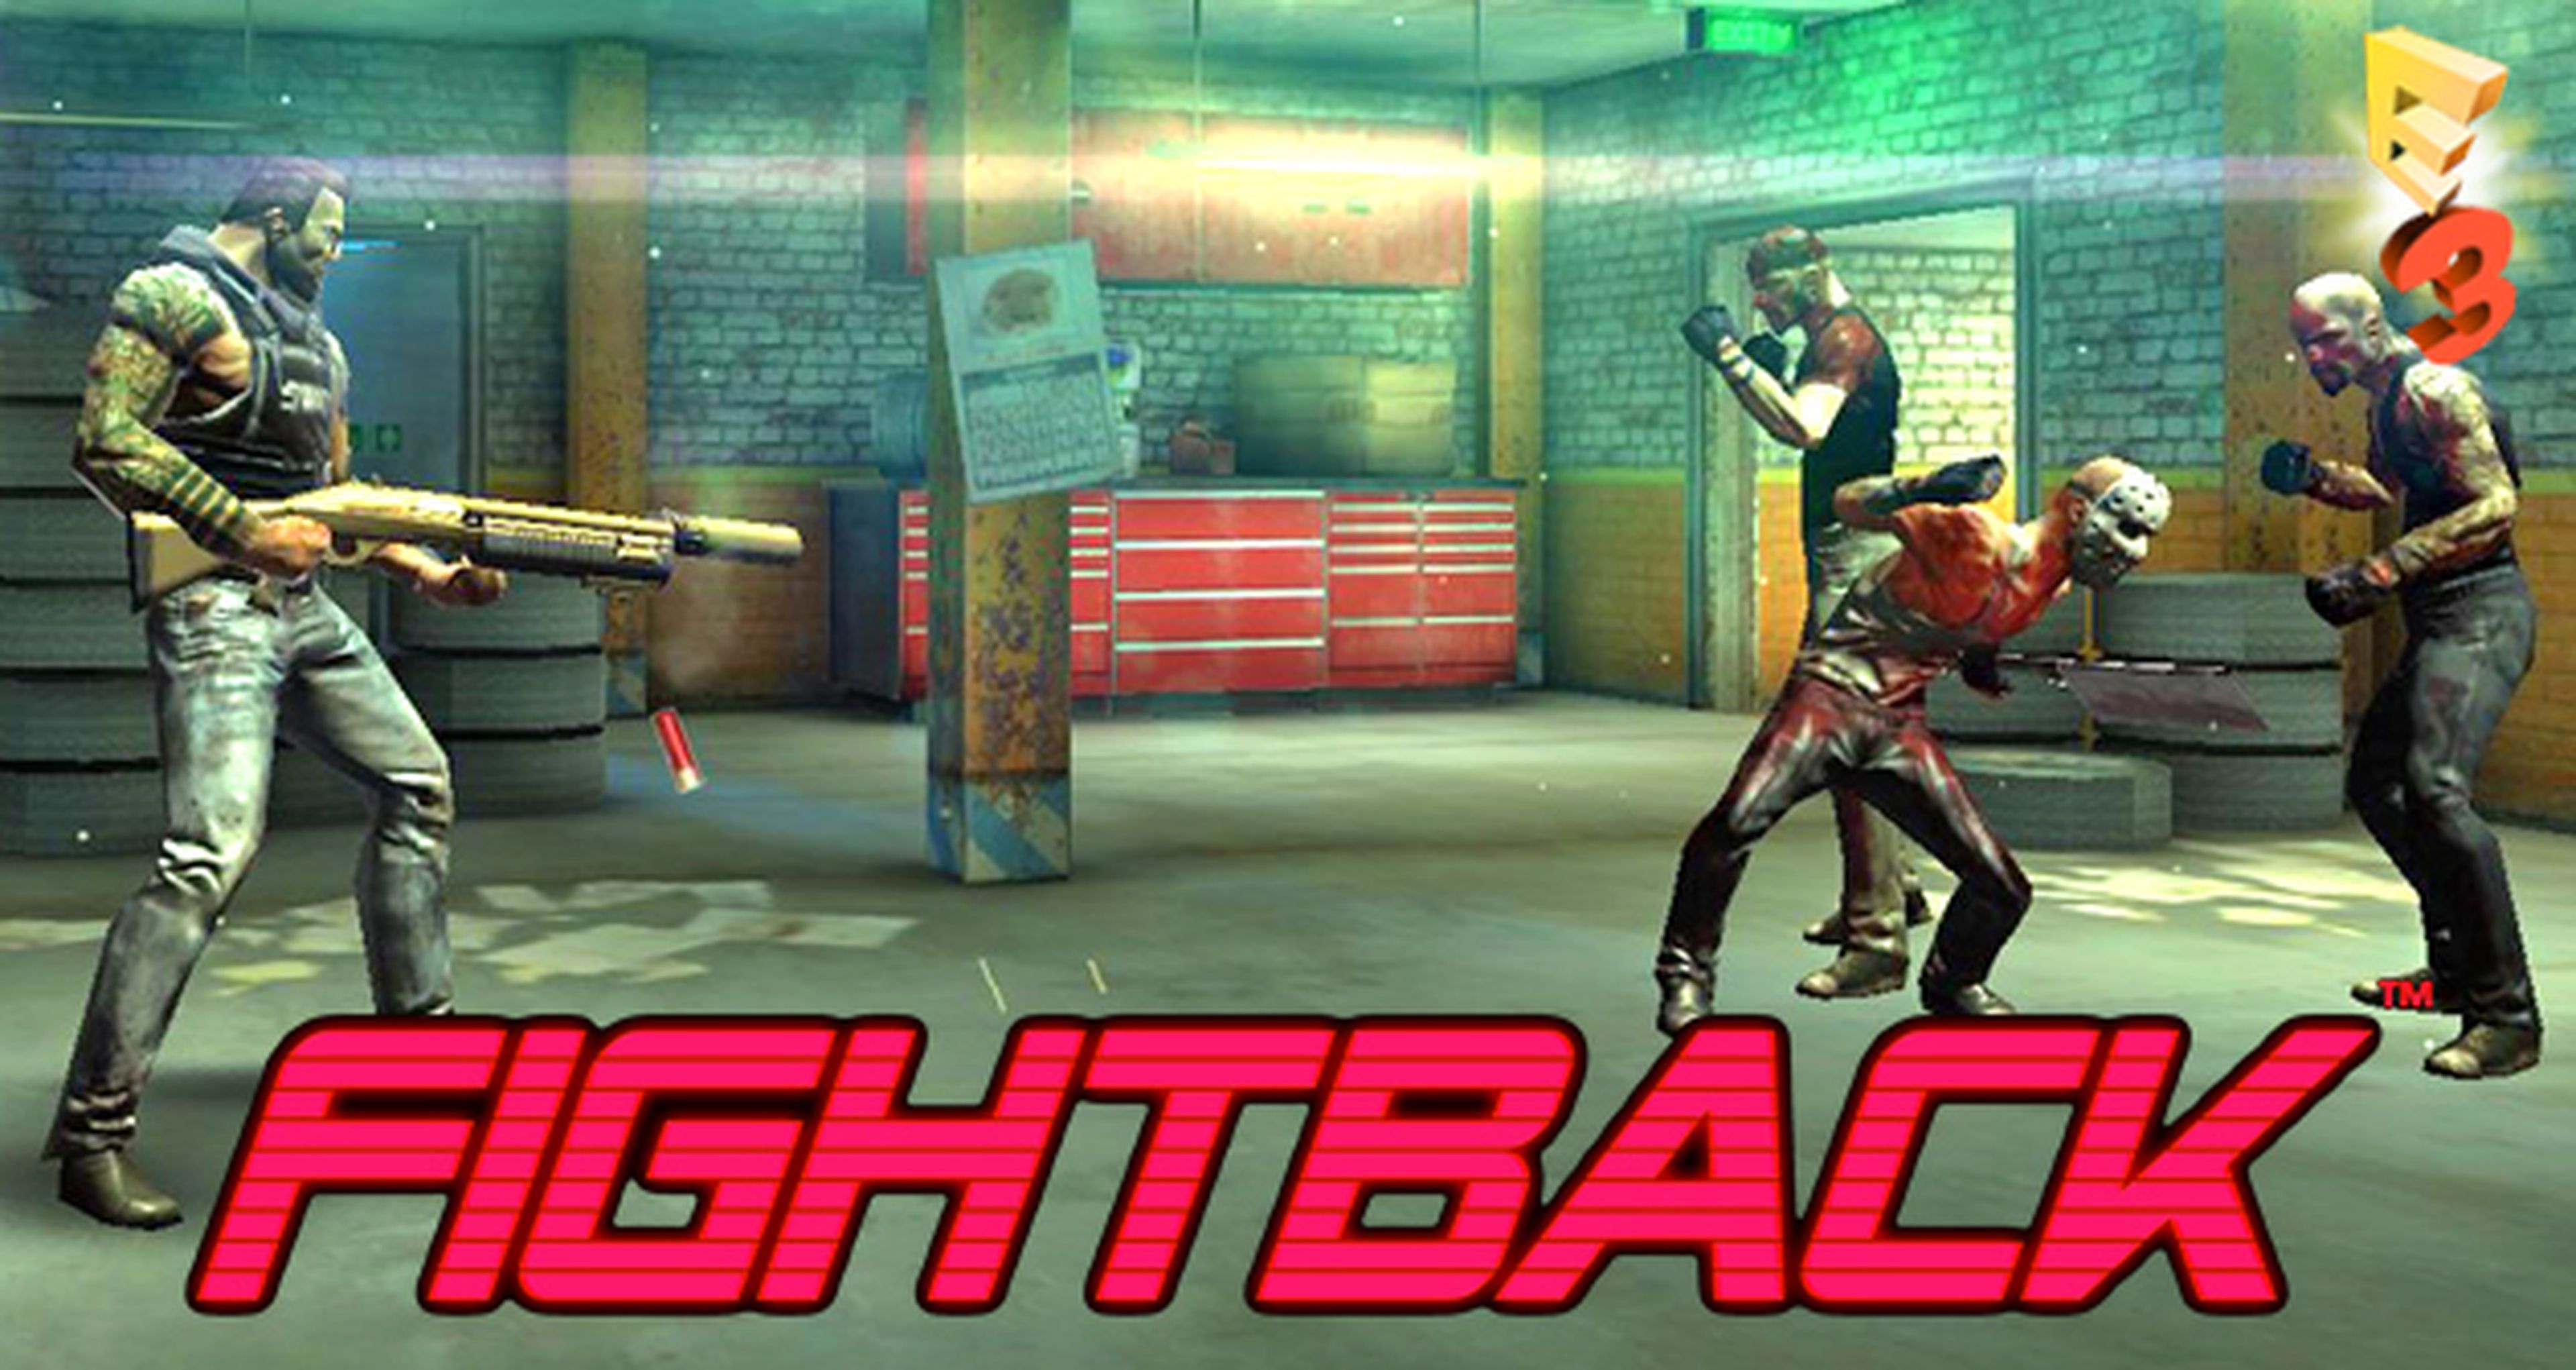 E3 2013: Teaser de Fightback, lo nuevo de Ninja Theory